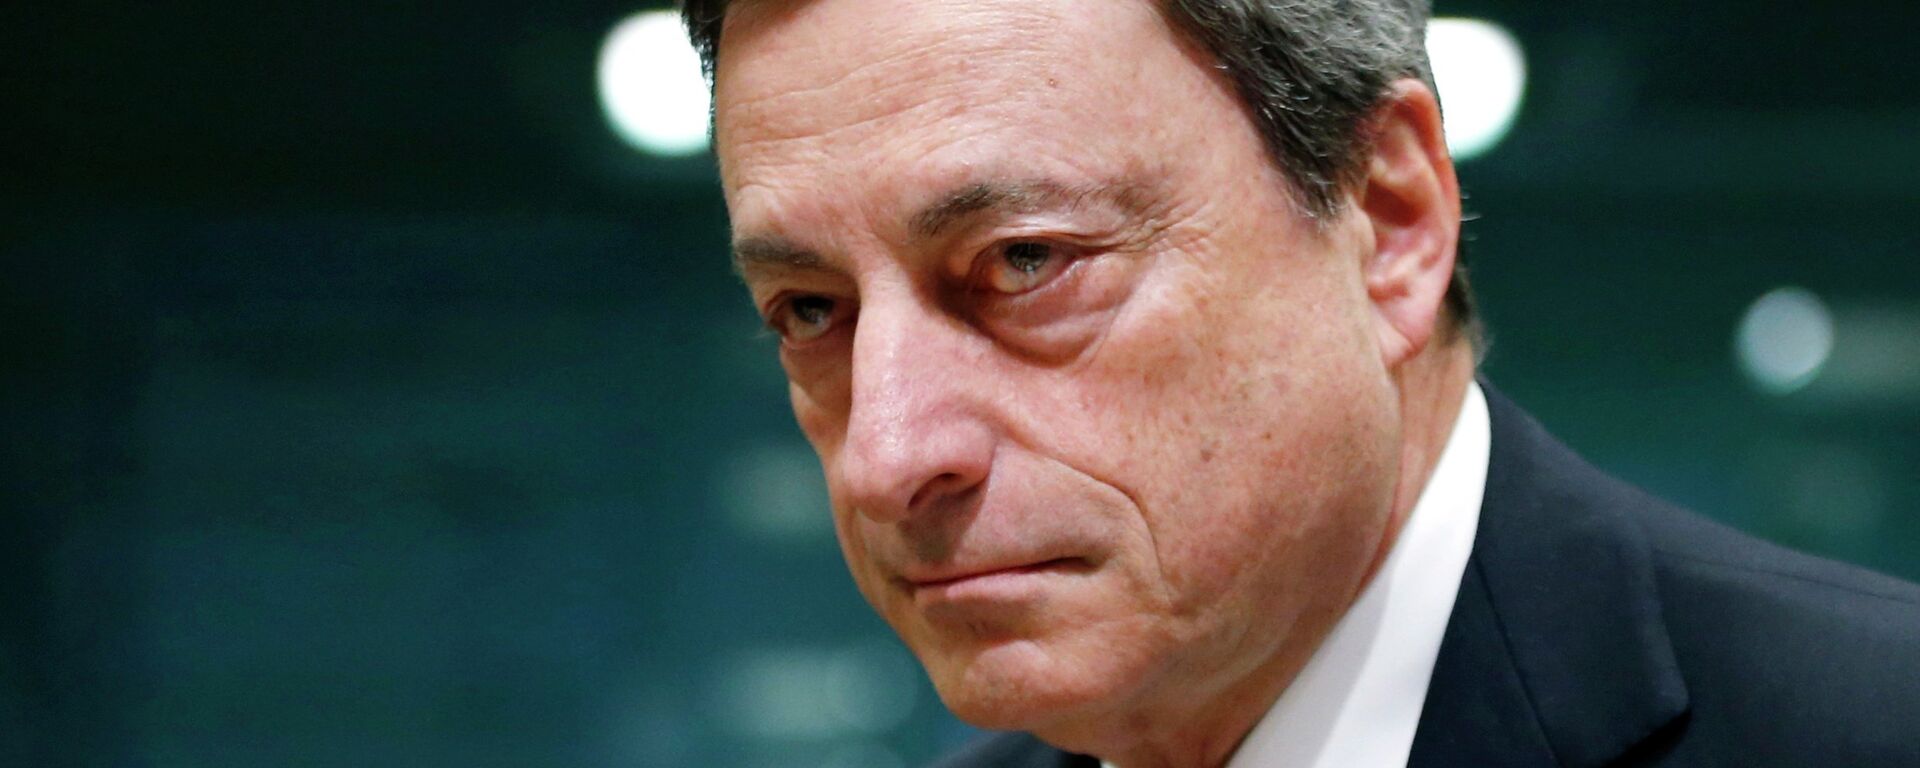 Mario Draghi, primer ministro de Italia - Sputnik Mundo, 1920, 12.06.2021